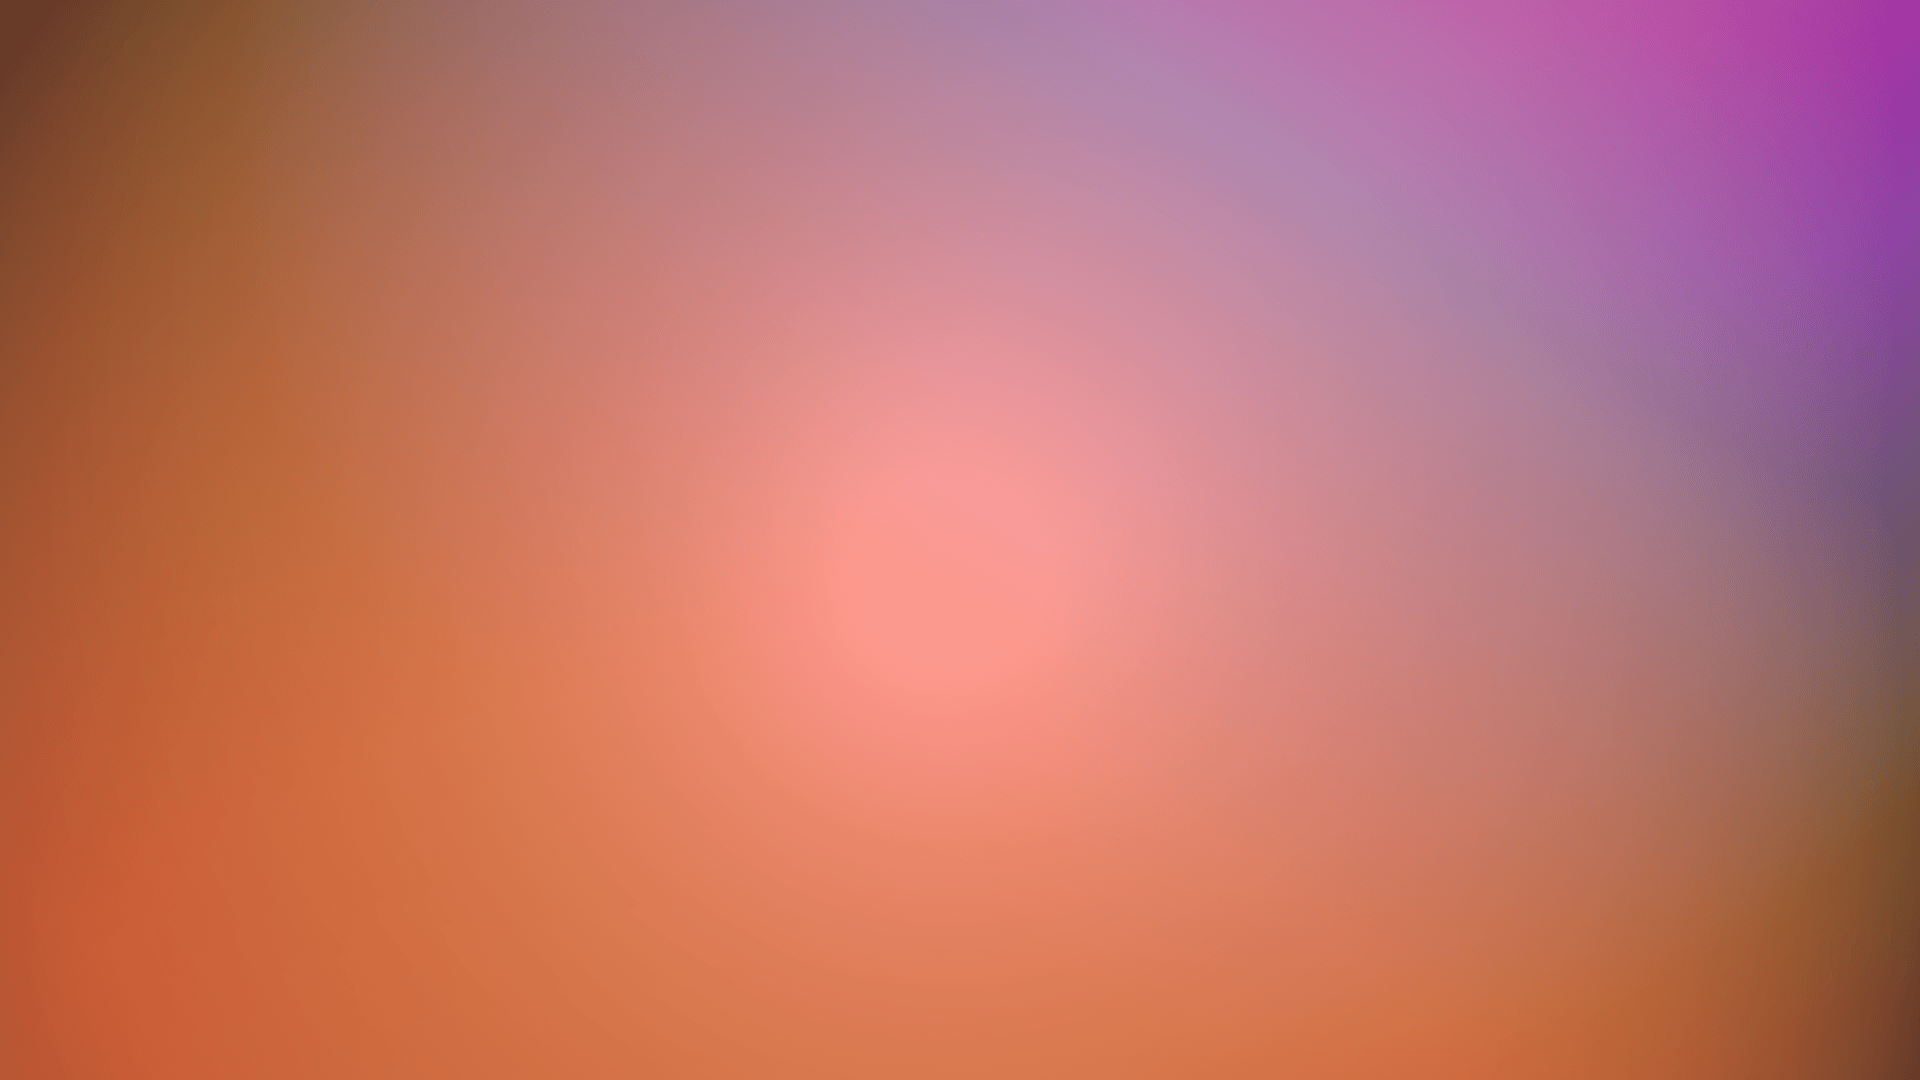 Peach gradient Wallpaper Image. HD Wallpaper Image